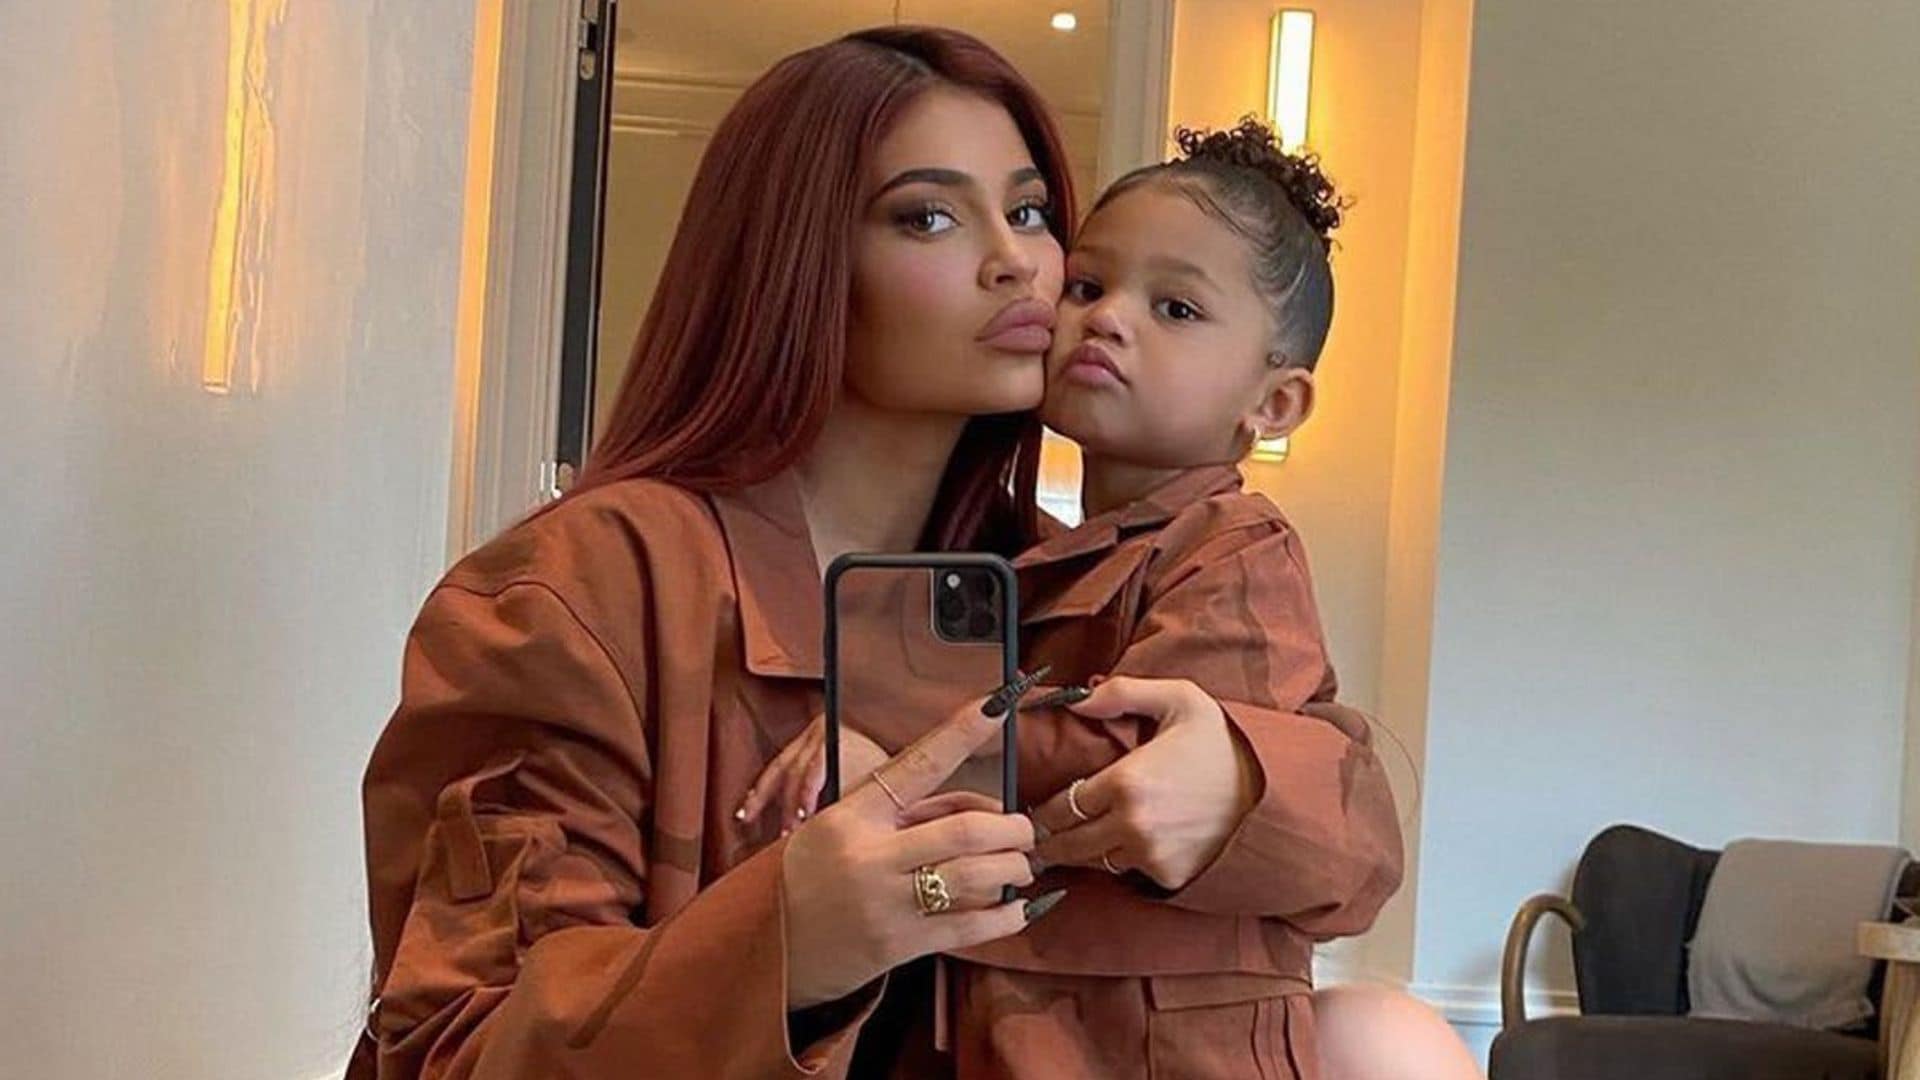 Kylie Jenner and her daughter, Stormi Webster